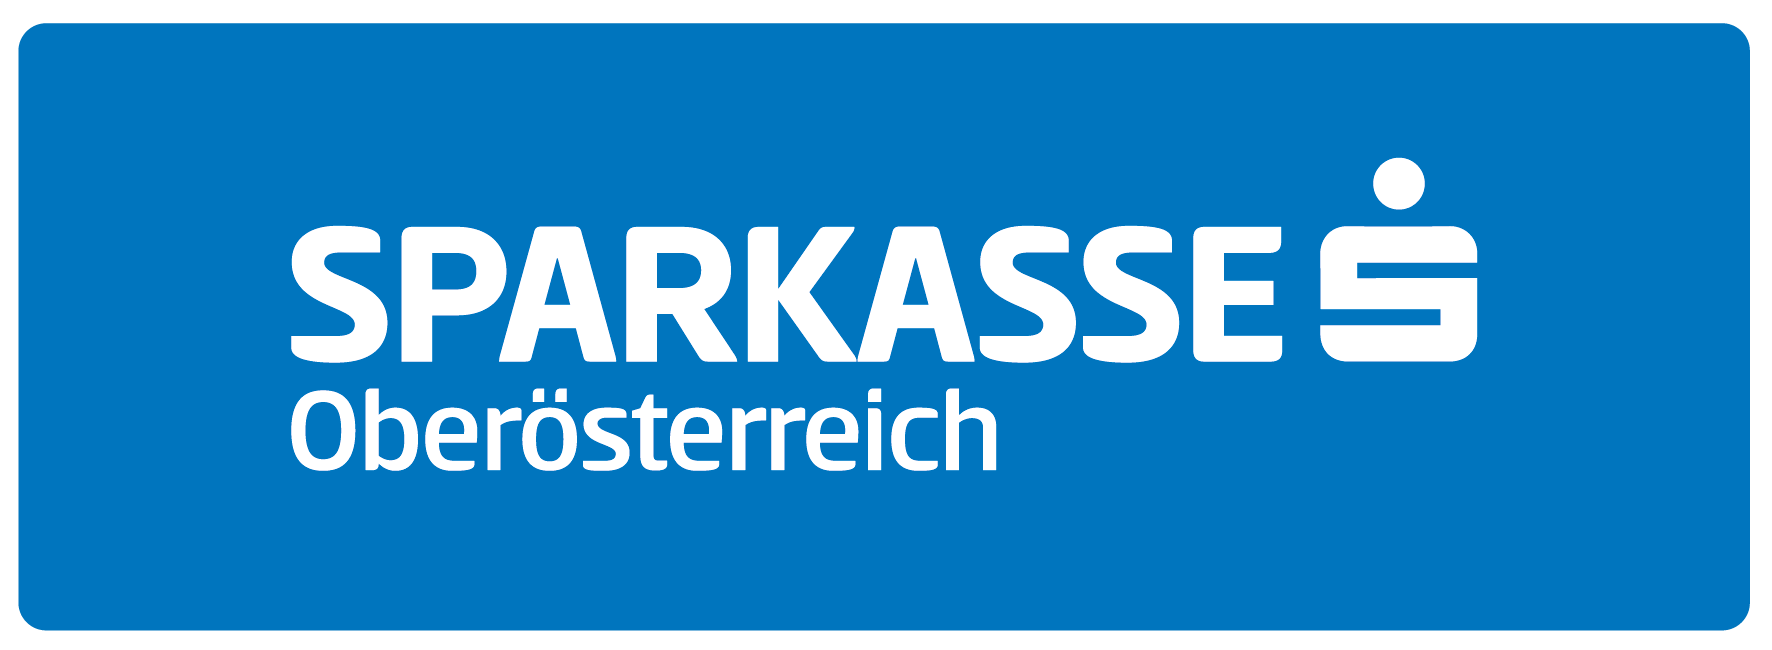 Logo SPK Oberoesterreich BrightBlue KUNDE